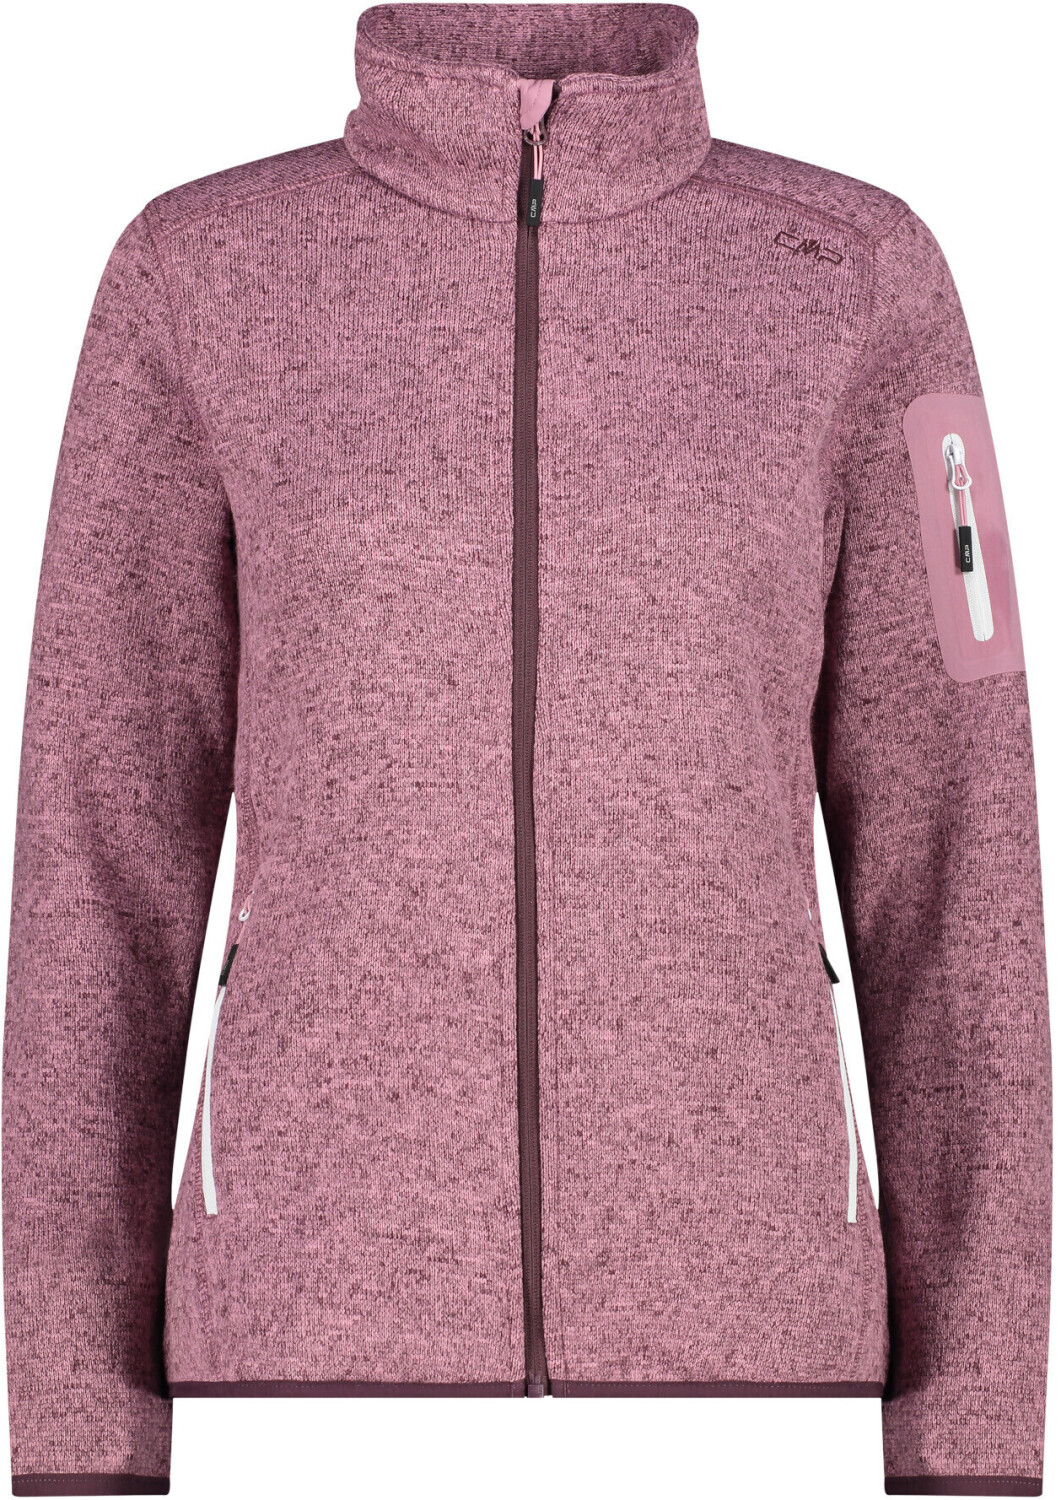 CMP Fleece Jacket ab € (3H14746) fard-plum bei Knit-Tech Melange | 34,95 Preisvergleich